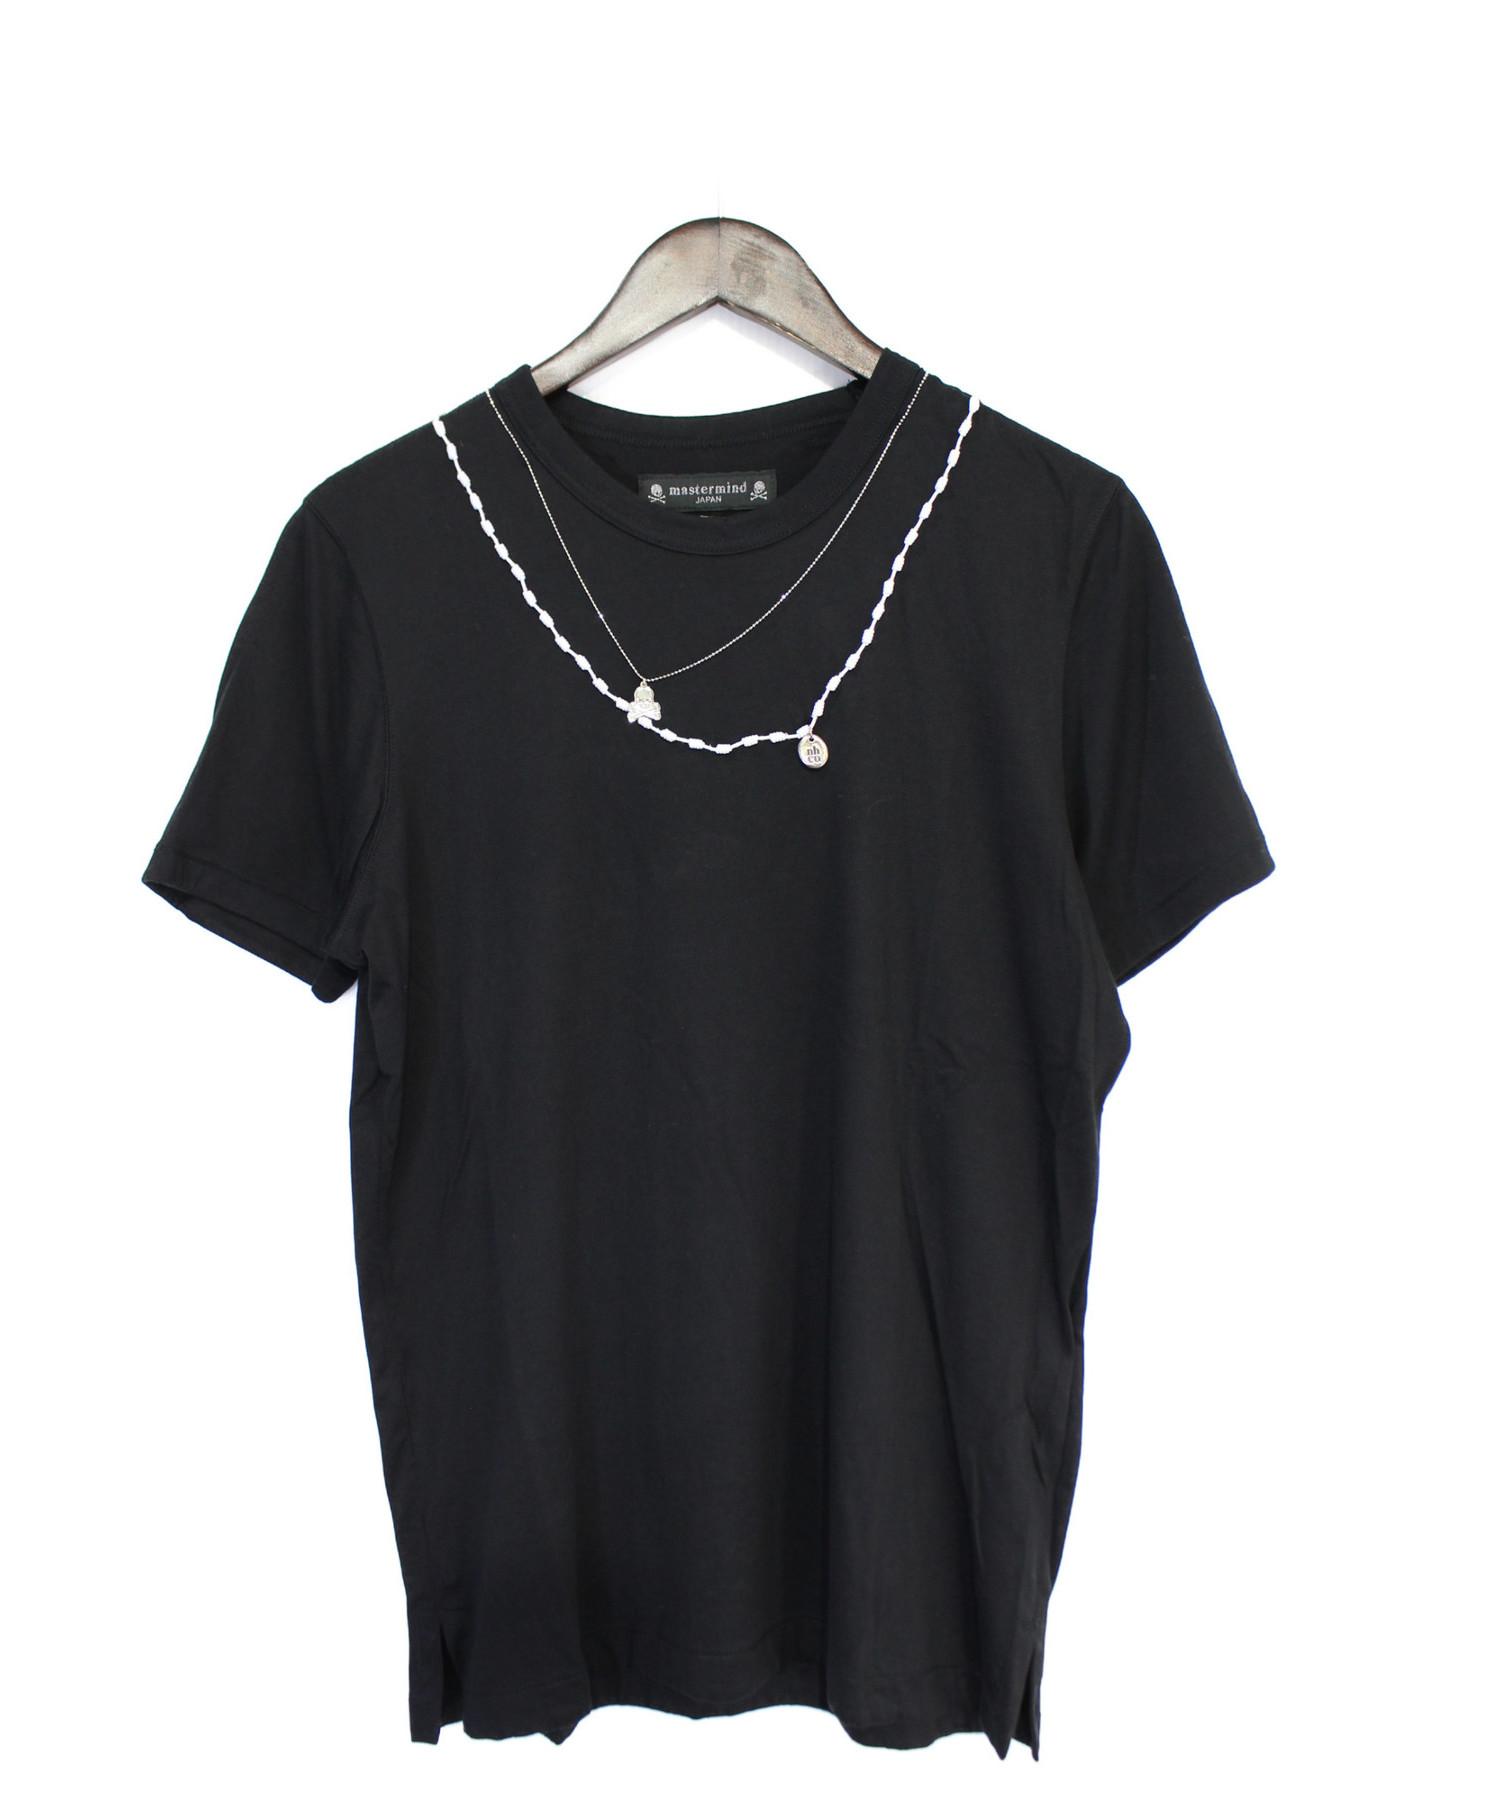 Mastermind JAPAN × NEIGHBIRHOOD (マスターマインド ジャパン × ネイバーフッド) ネックレスデザインTシャツ  ブラック サイズ:M